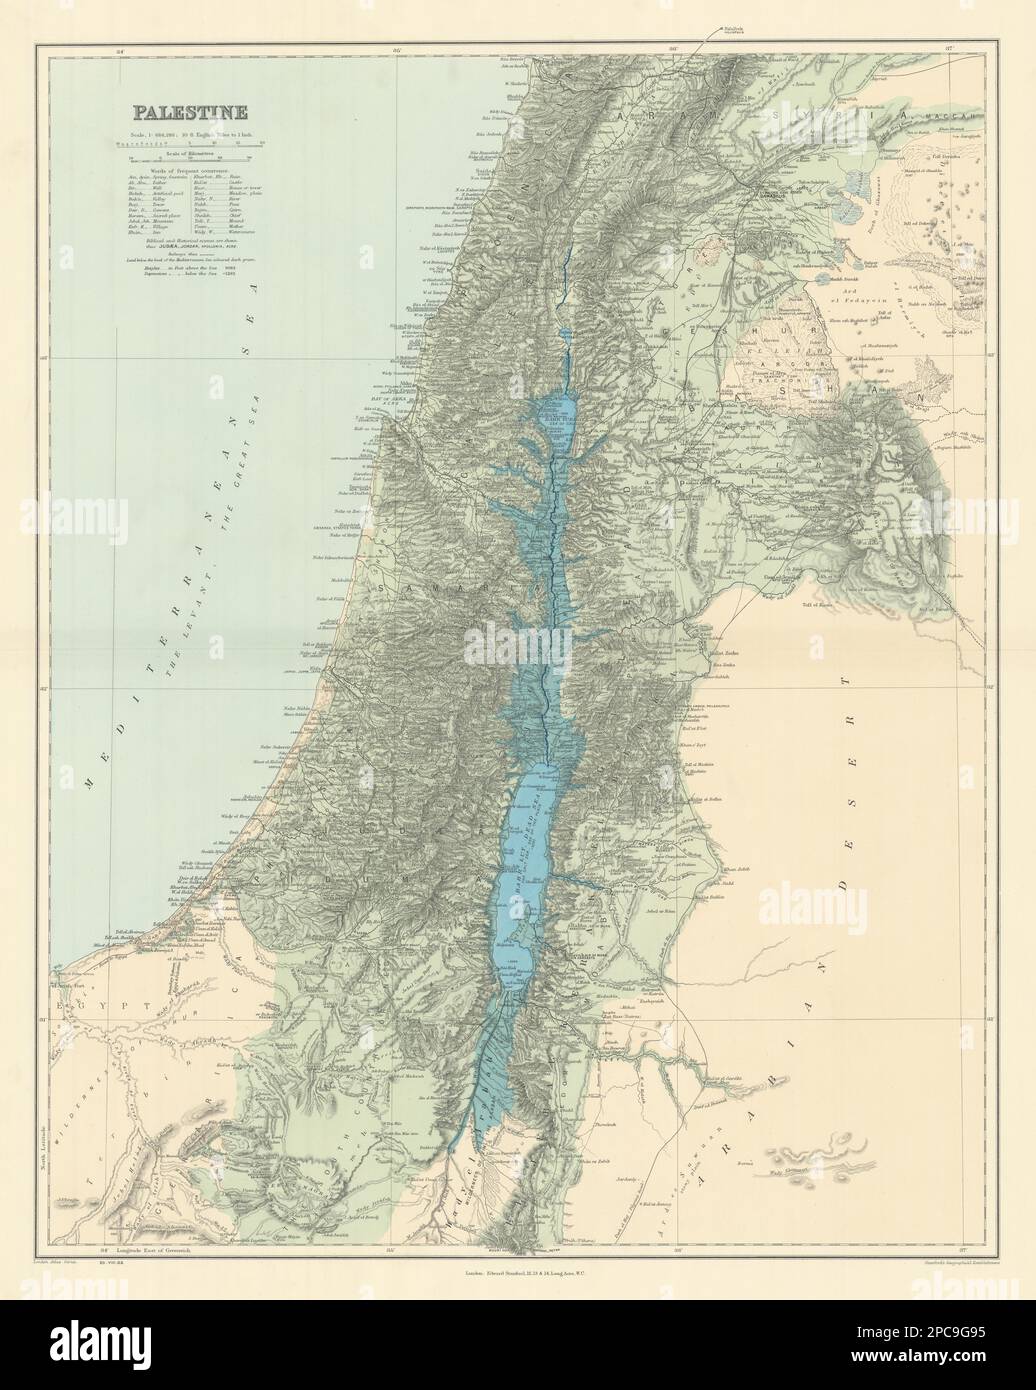 Palestina Terra Santa Israele. Nomi biblici e storici. STANFORD 1904 vecchia mappa Foto Stock